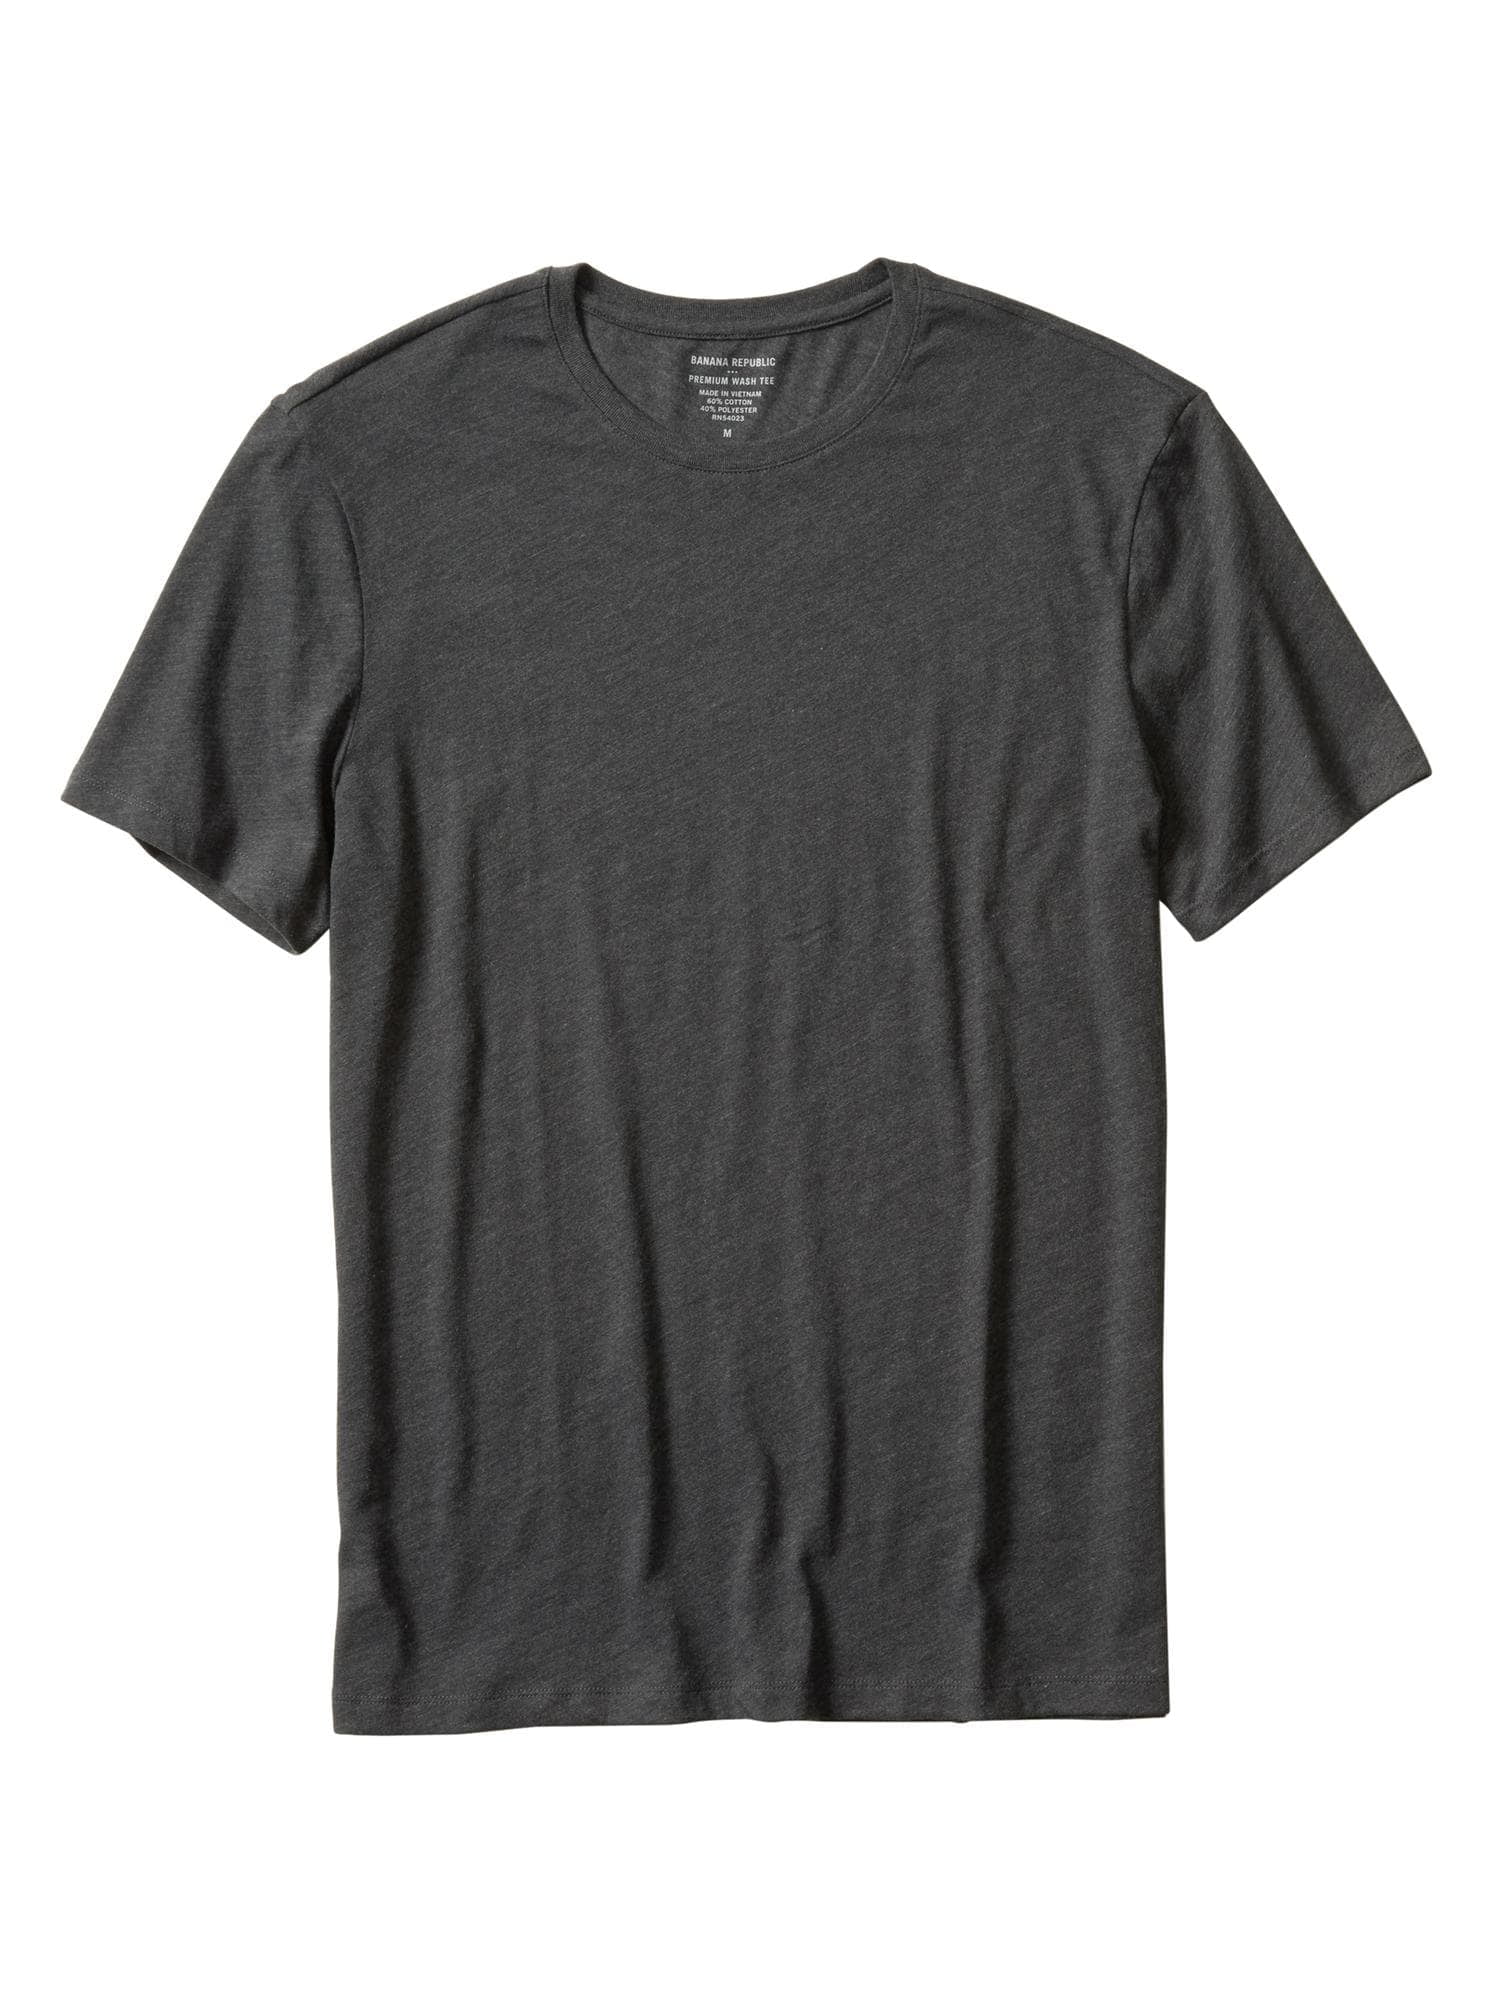 Banana Republic Men's Crew Neck Premium-Wash T Shirts (Charcoal, Large ...